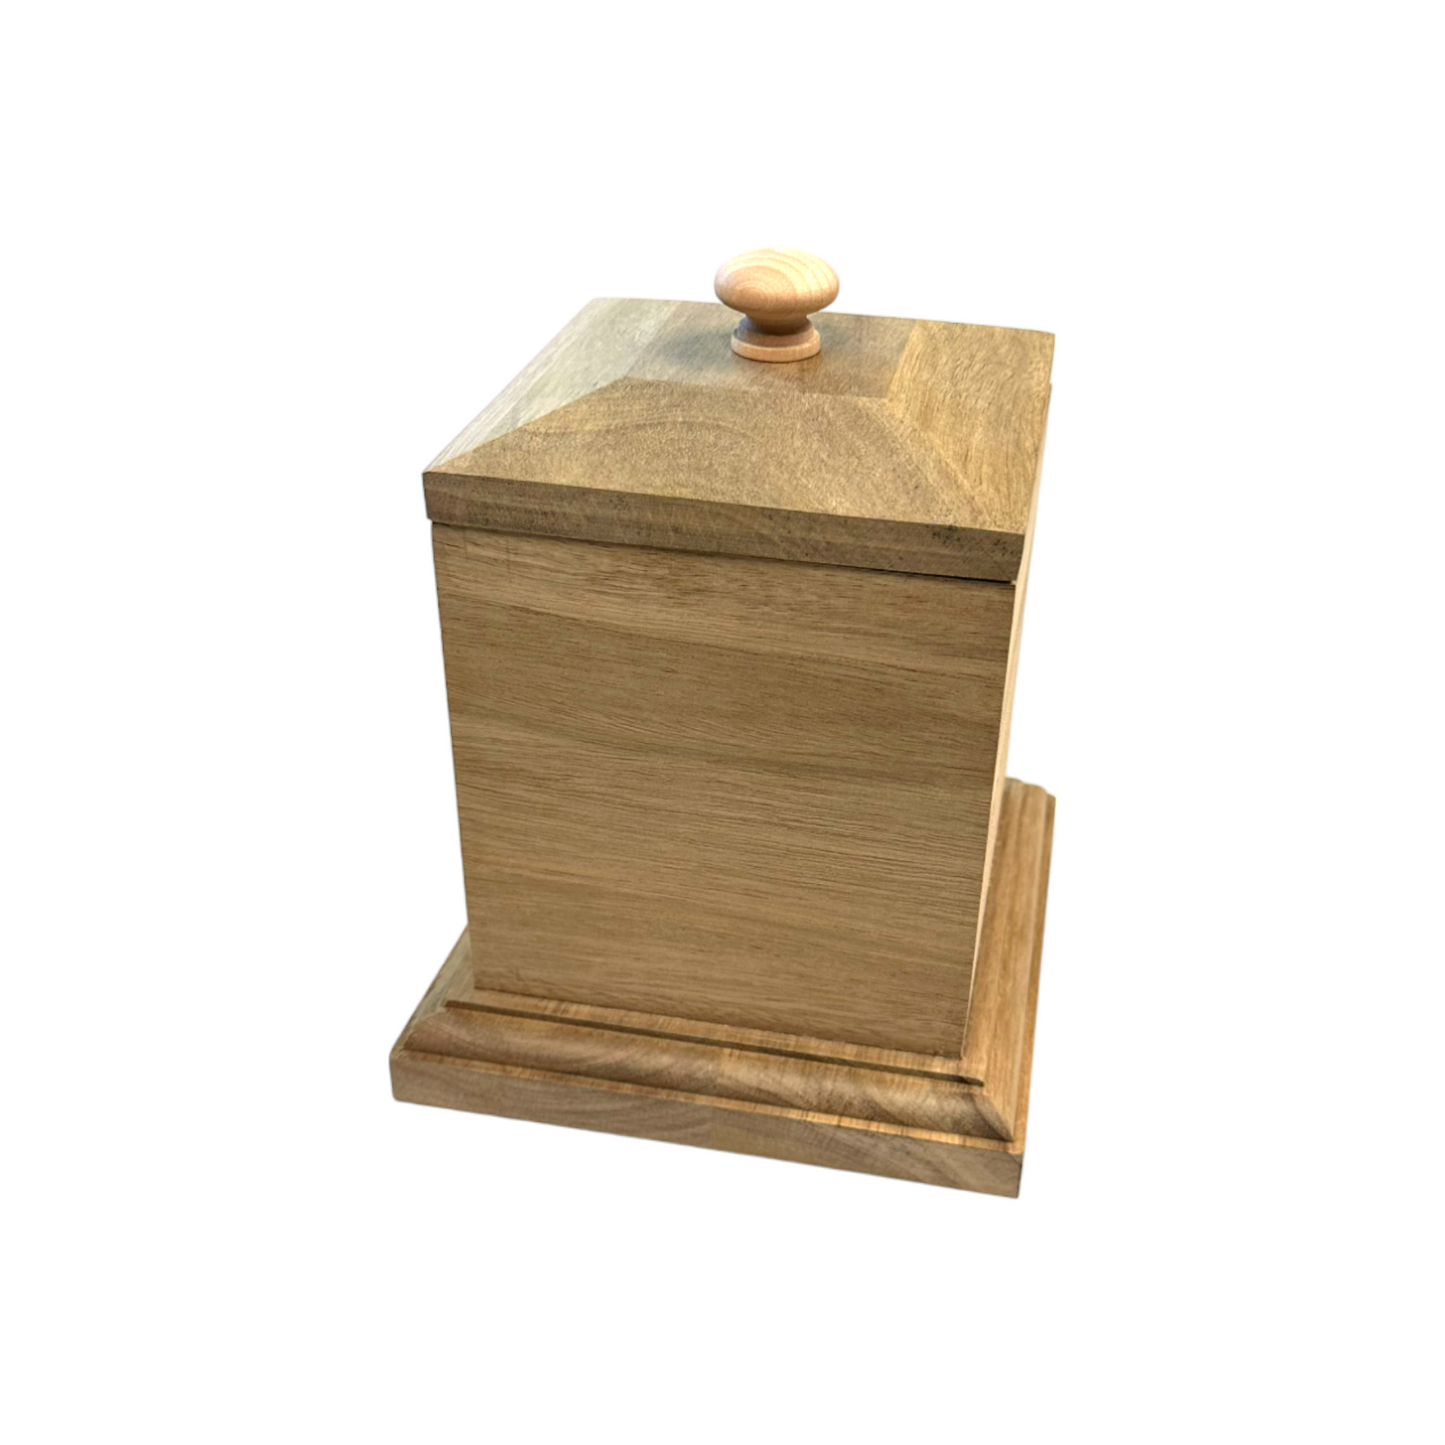 Square Wooden Urn